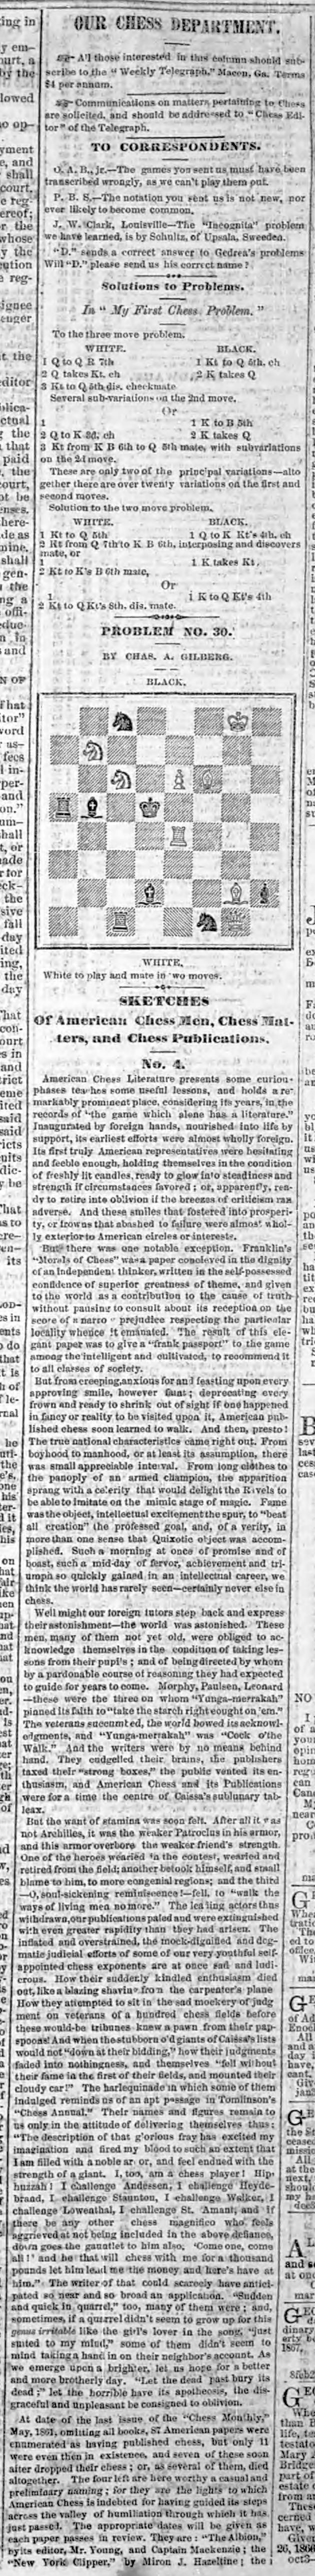 1867.03.15-01 Macon Georgia Weekly Telegraph.jpg